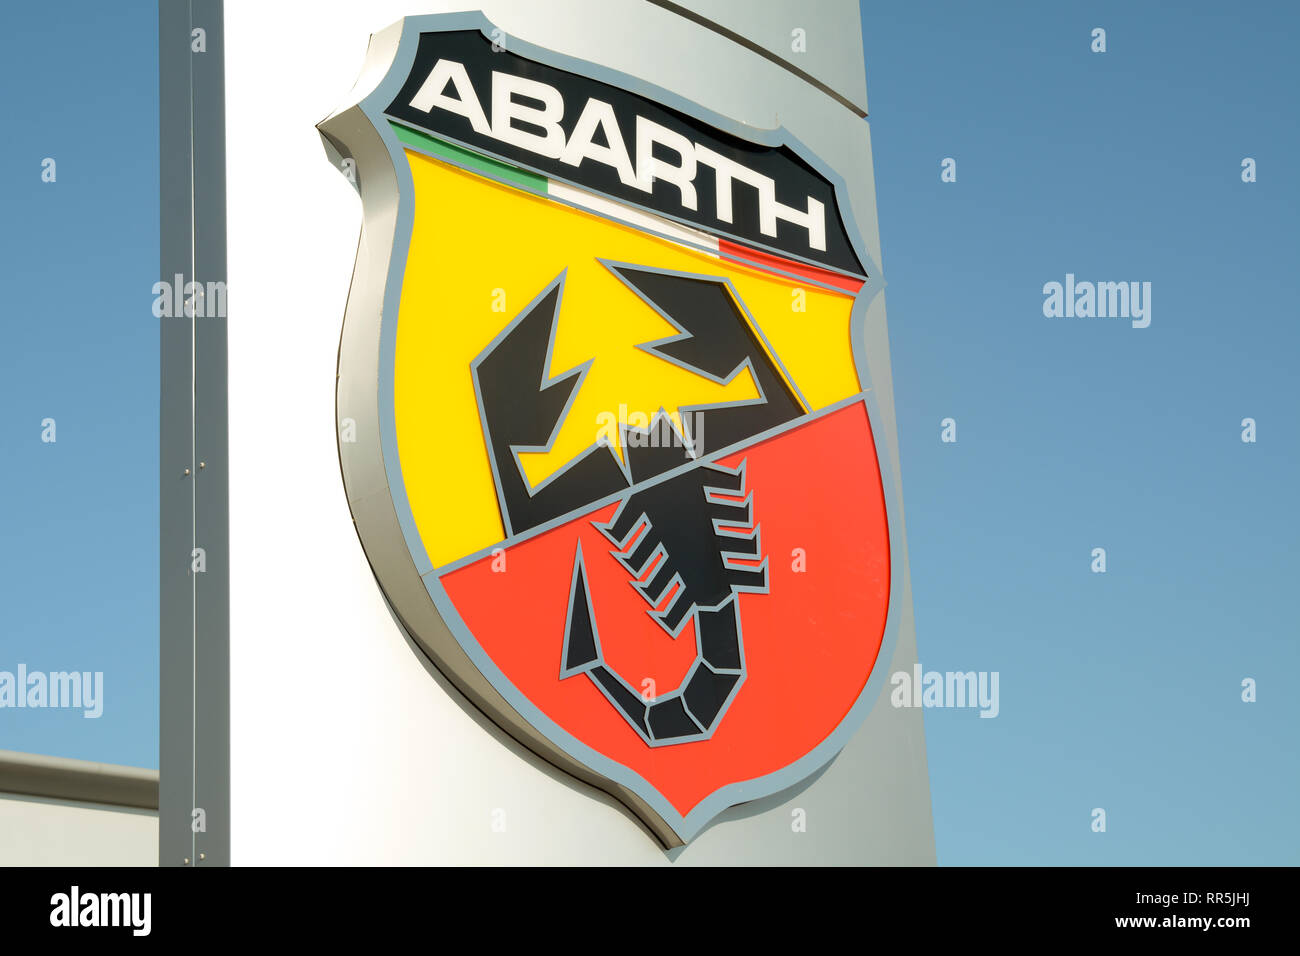 Abarth car logo sign Stock Photo